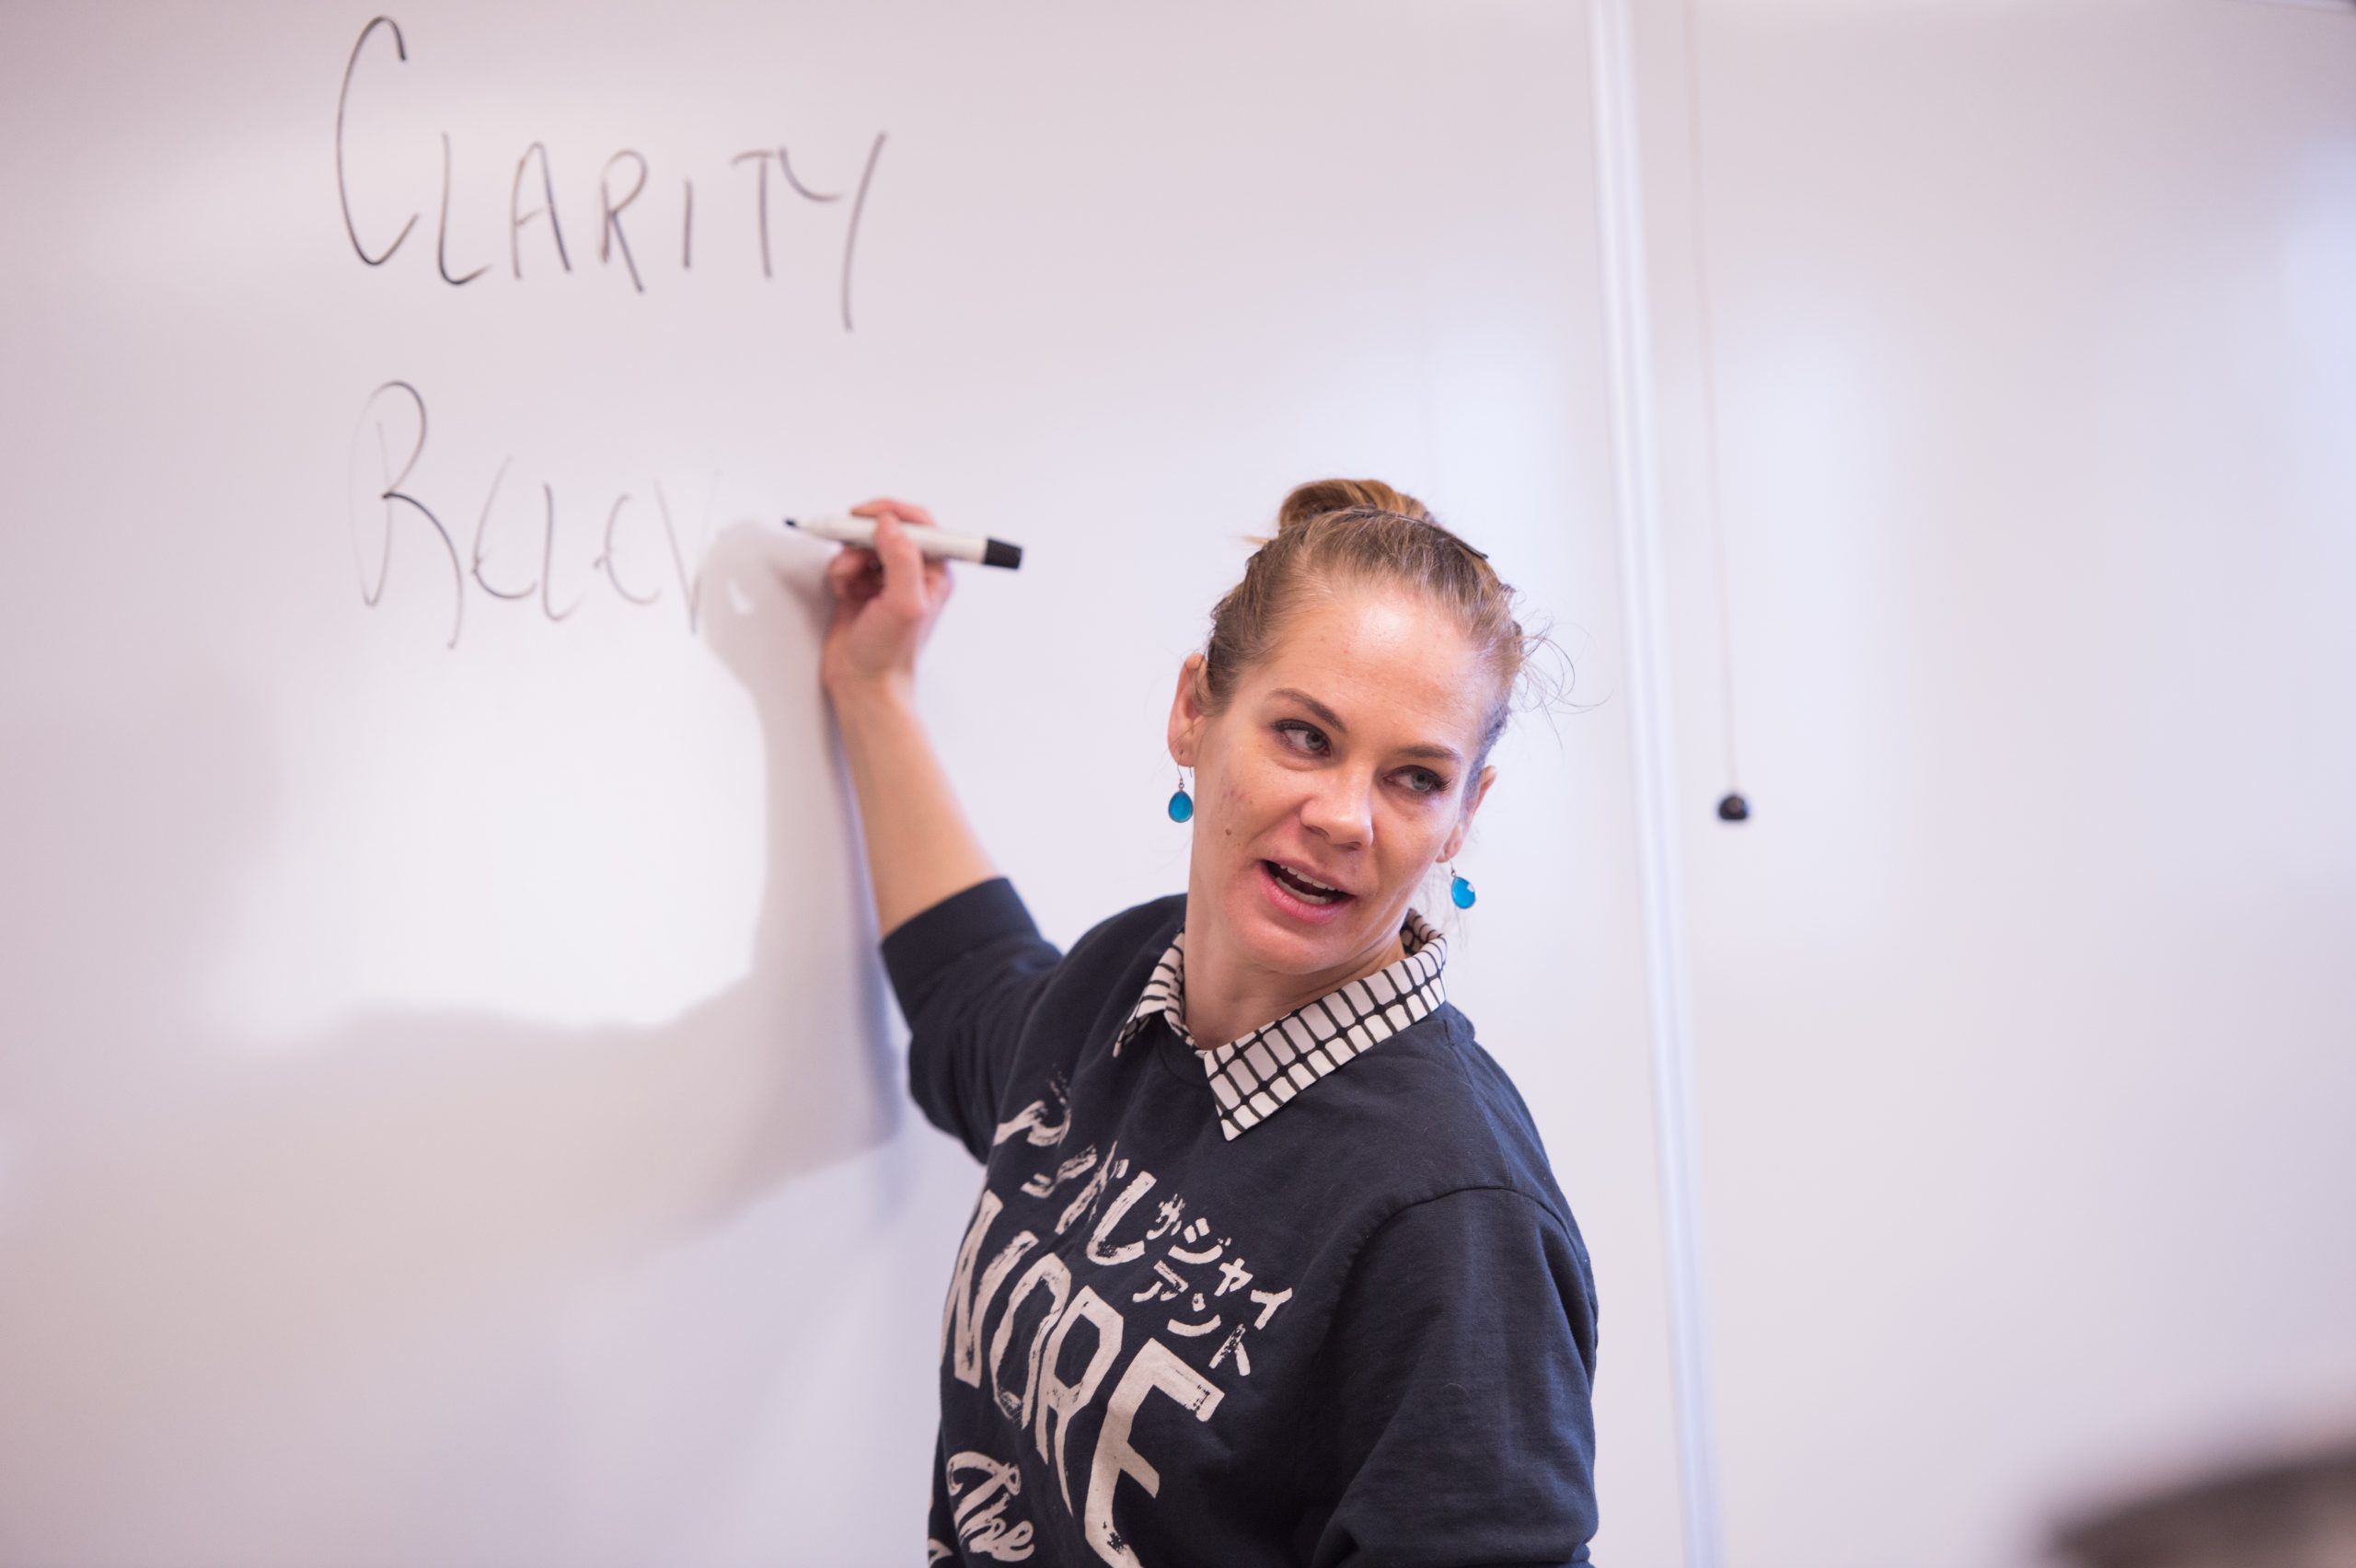 Instructor Julie Kedzie writing on a whiteboard.